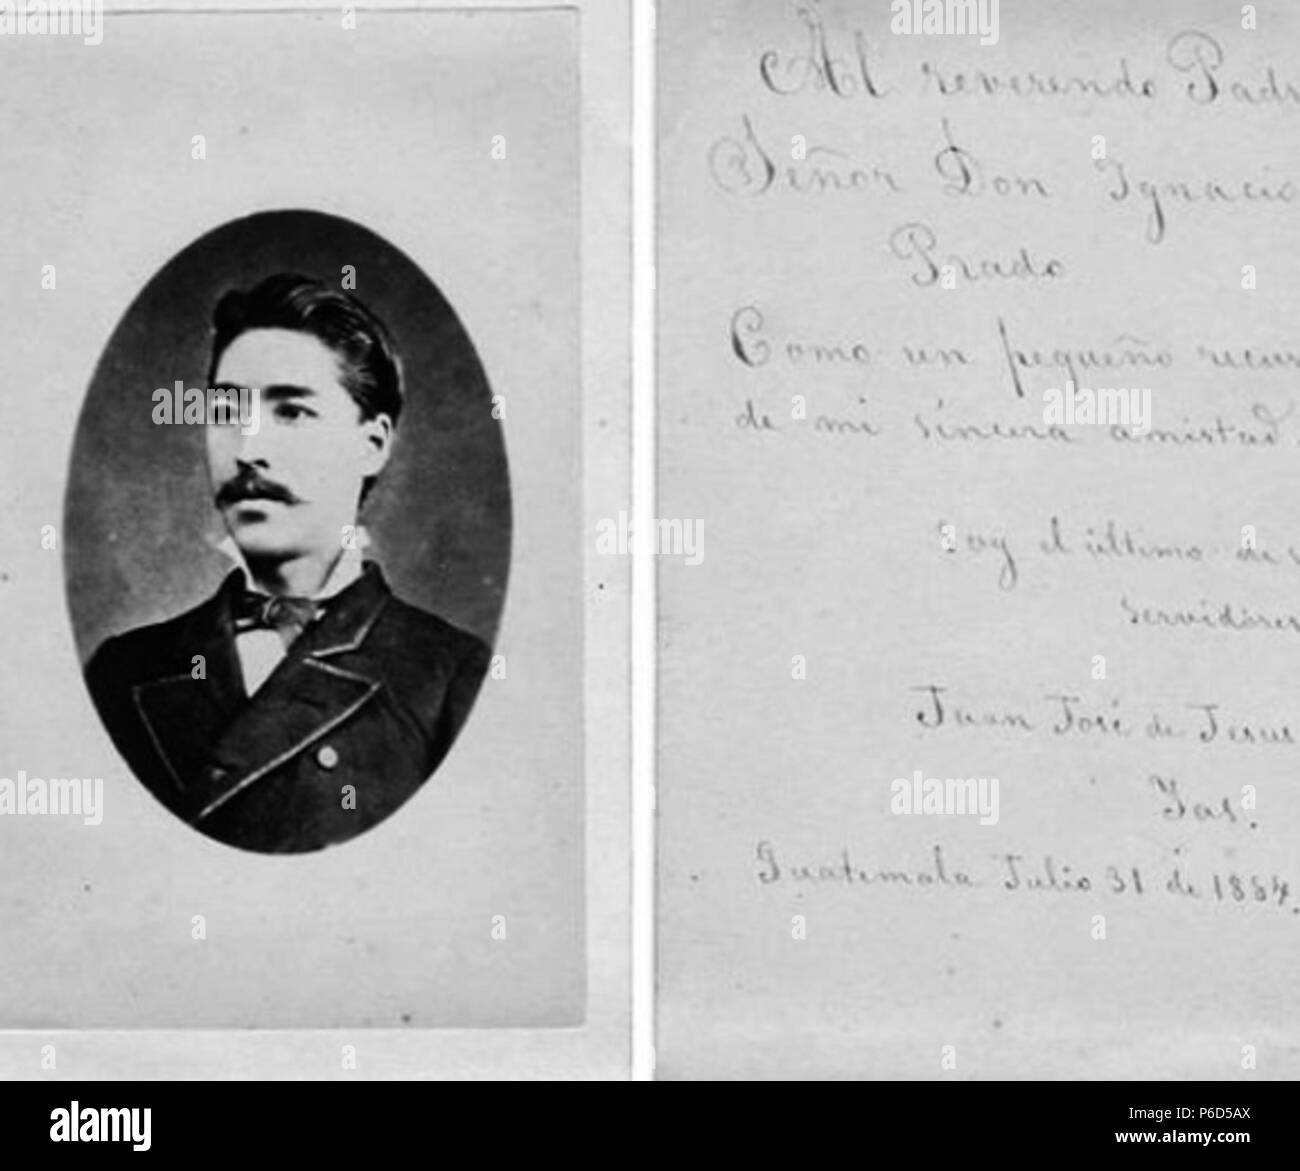 Español : Manuel de Jesús Yas, fotógrafo japonés naturalizado guatemalteco. 10 Janvier 1890 62 Manueldejesusyas2 Banque D'Images